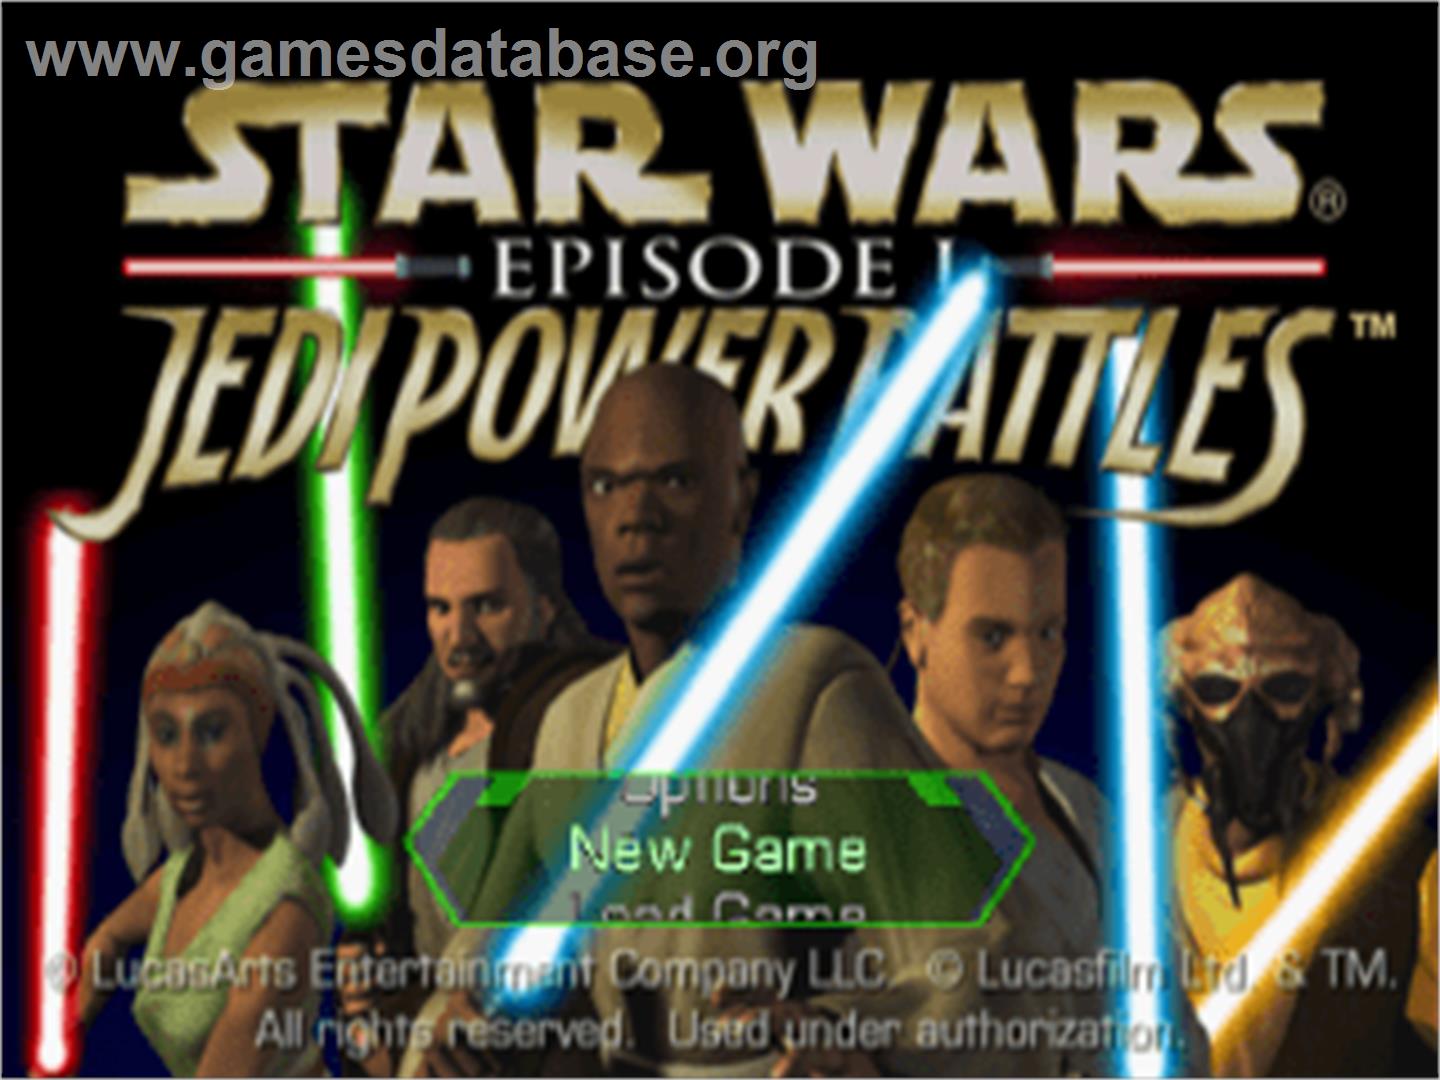 Star Wars: Episode I - Jedi Power Battles - Sony Playstation - Artwork - Title Screen